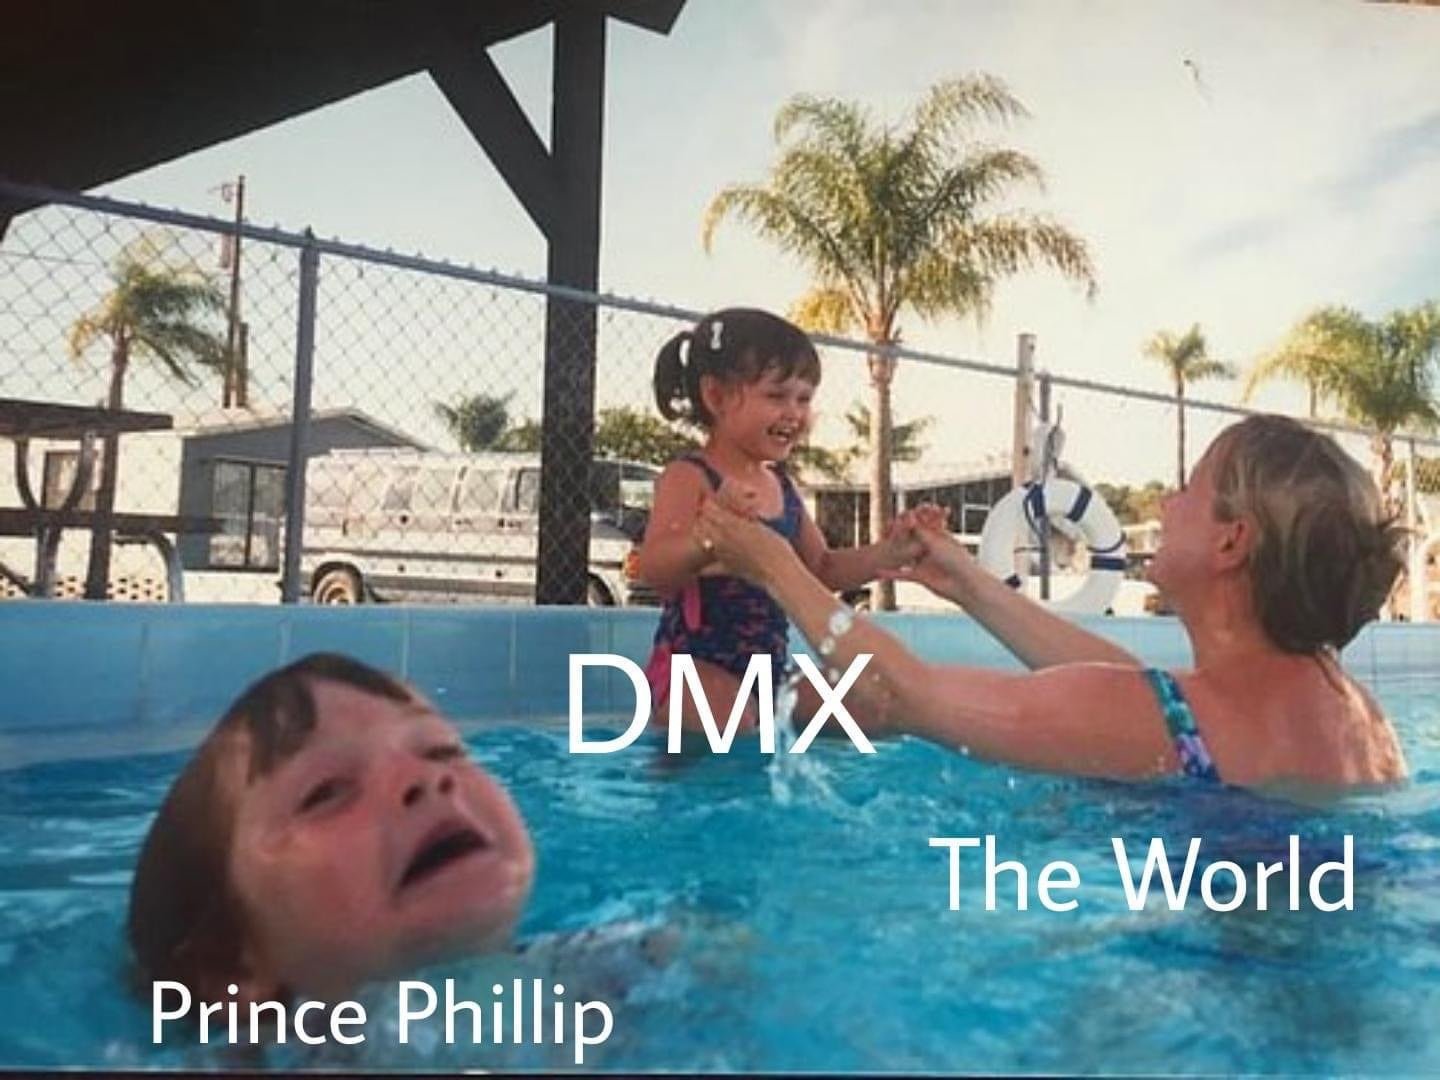 The world treating DMX vs Prince Phillip meme